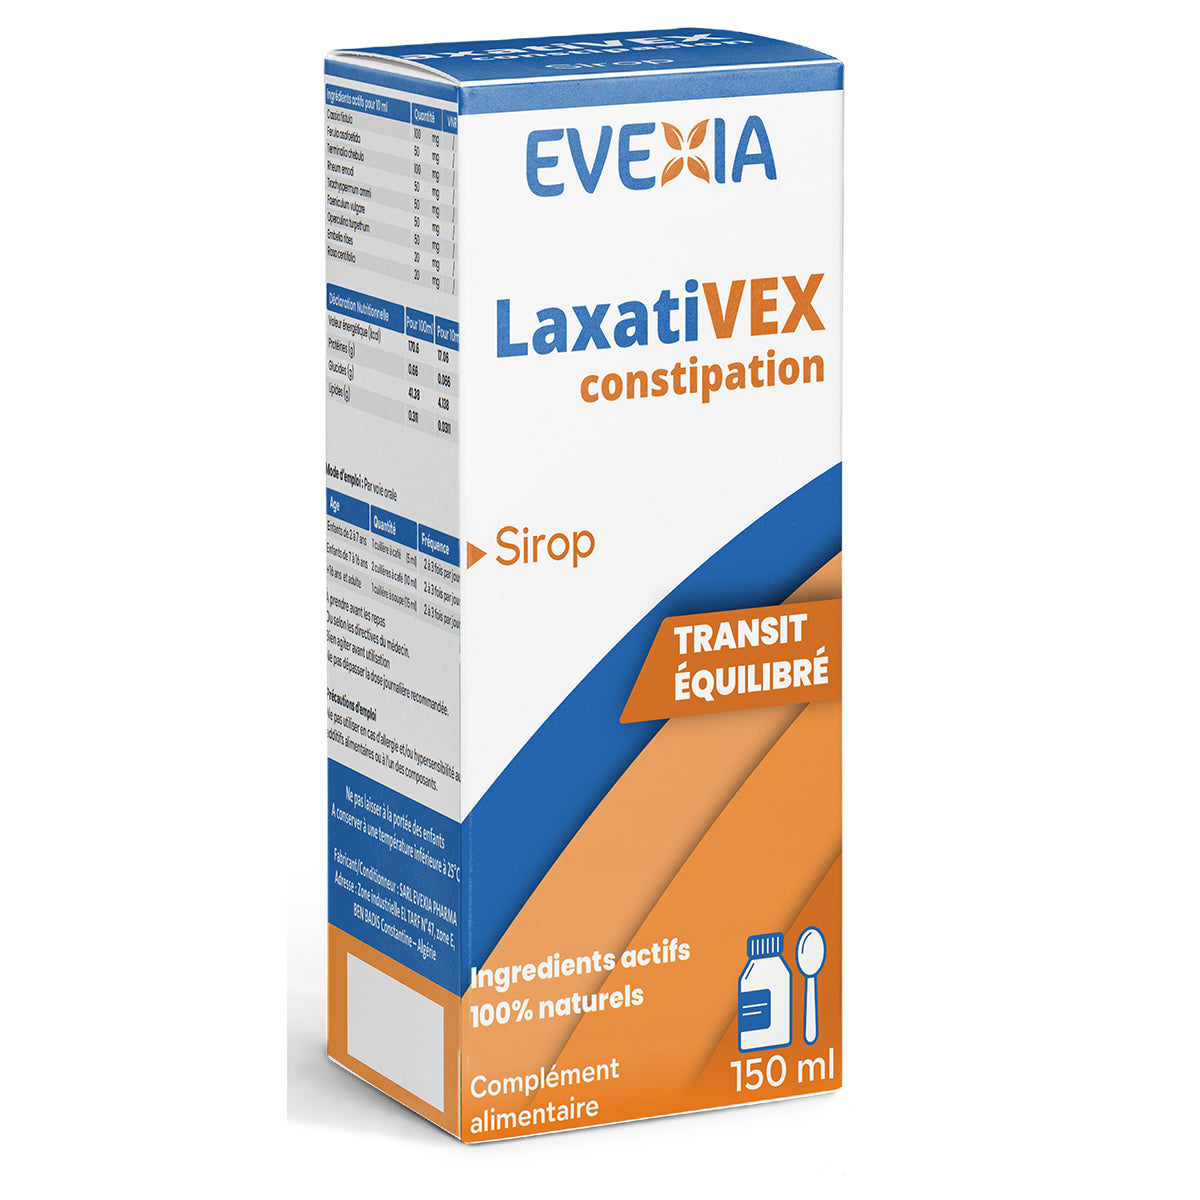 SIROP laxativex